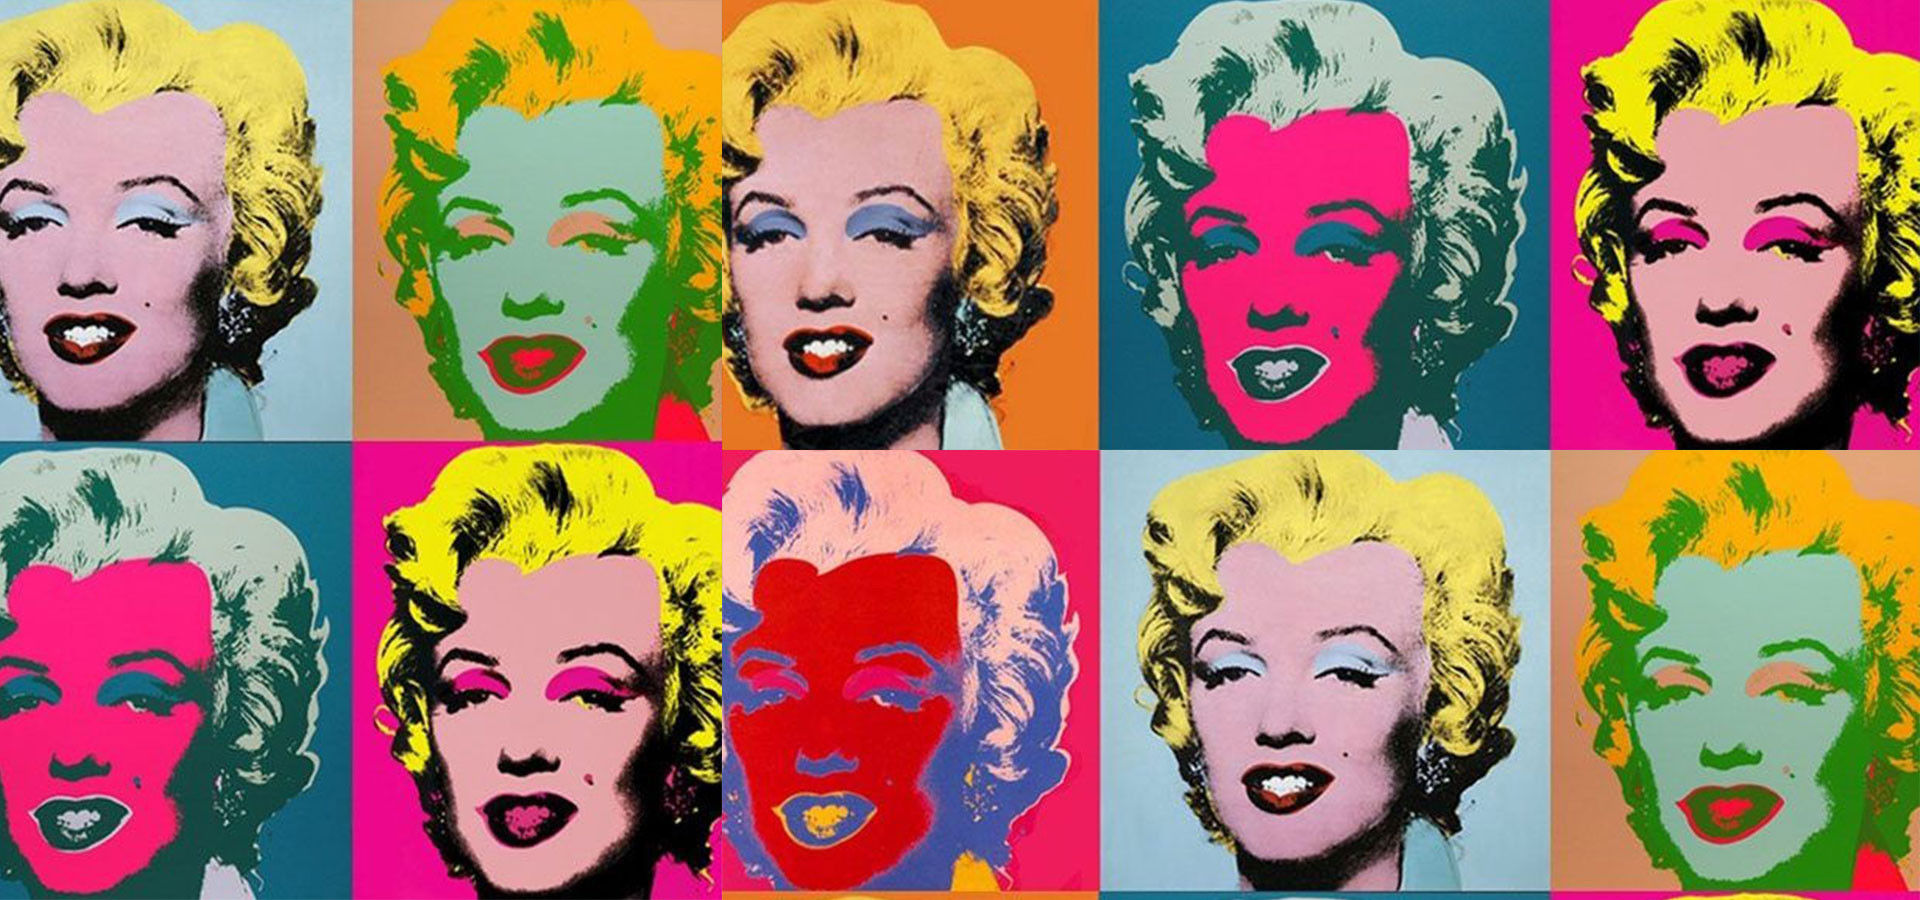 Voorbeeld van Pop Art: Marilyn Monroe's Diptych van Andy Warhol